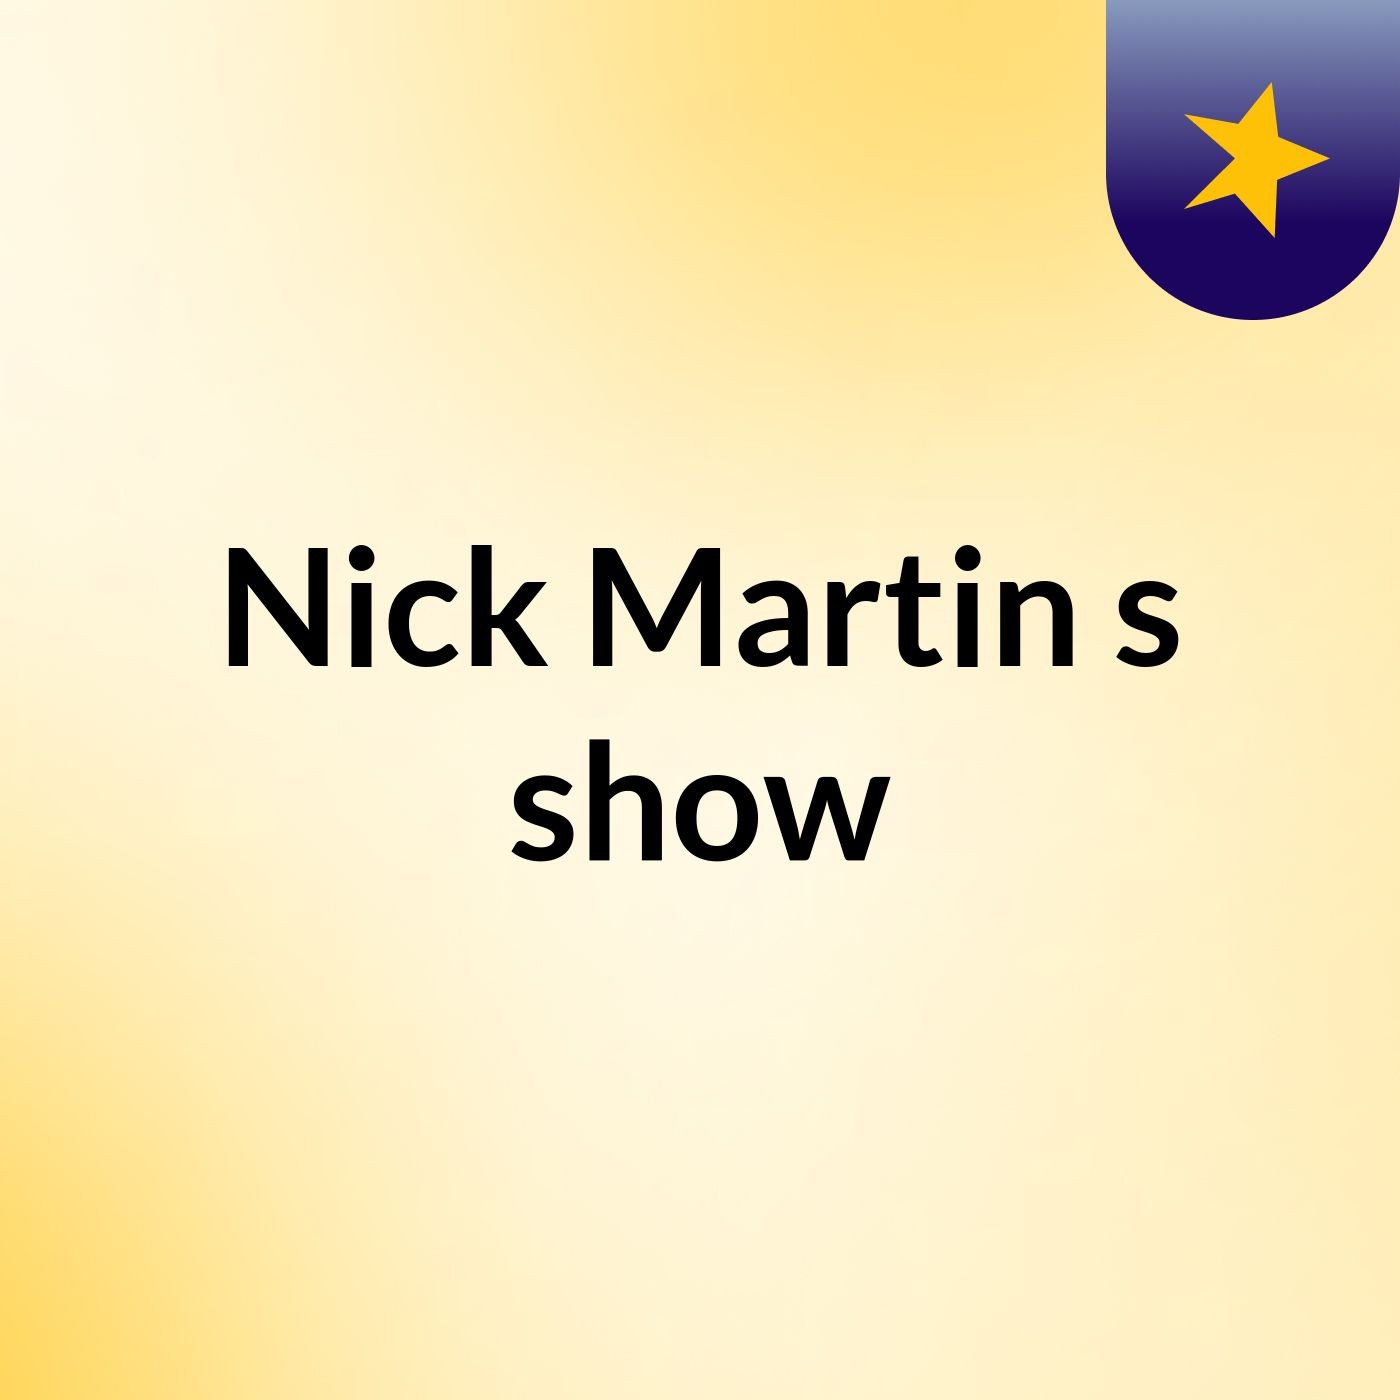 Nick Martin's show